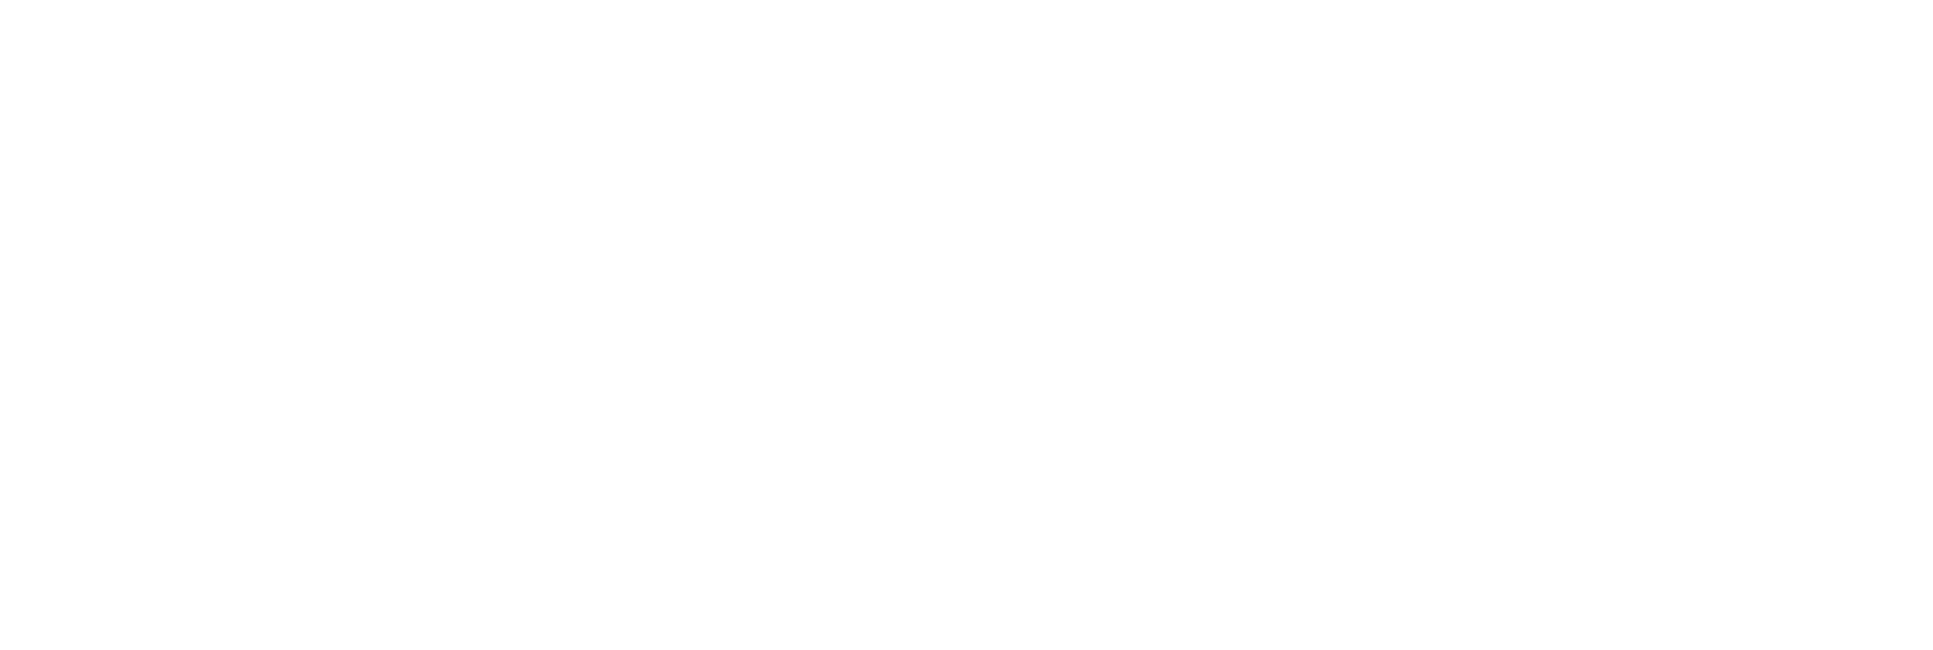 filmfreeway-logo-hires-white